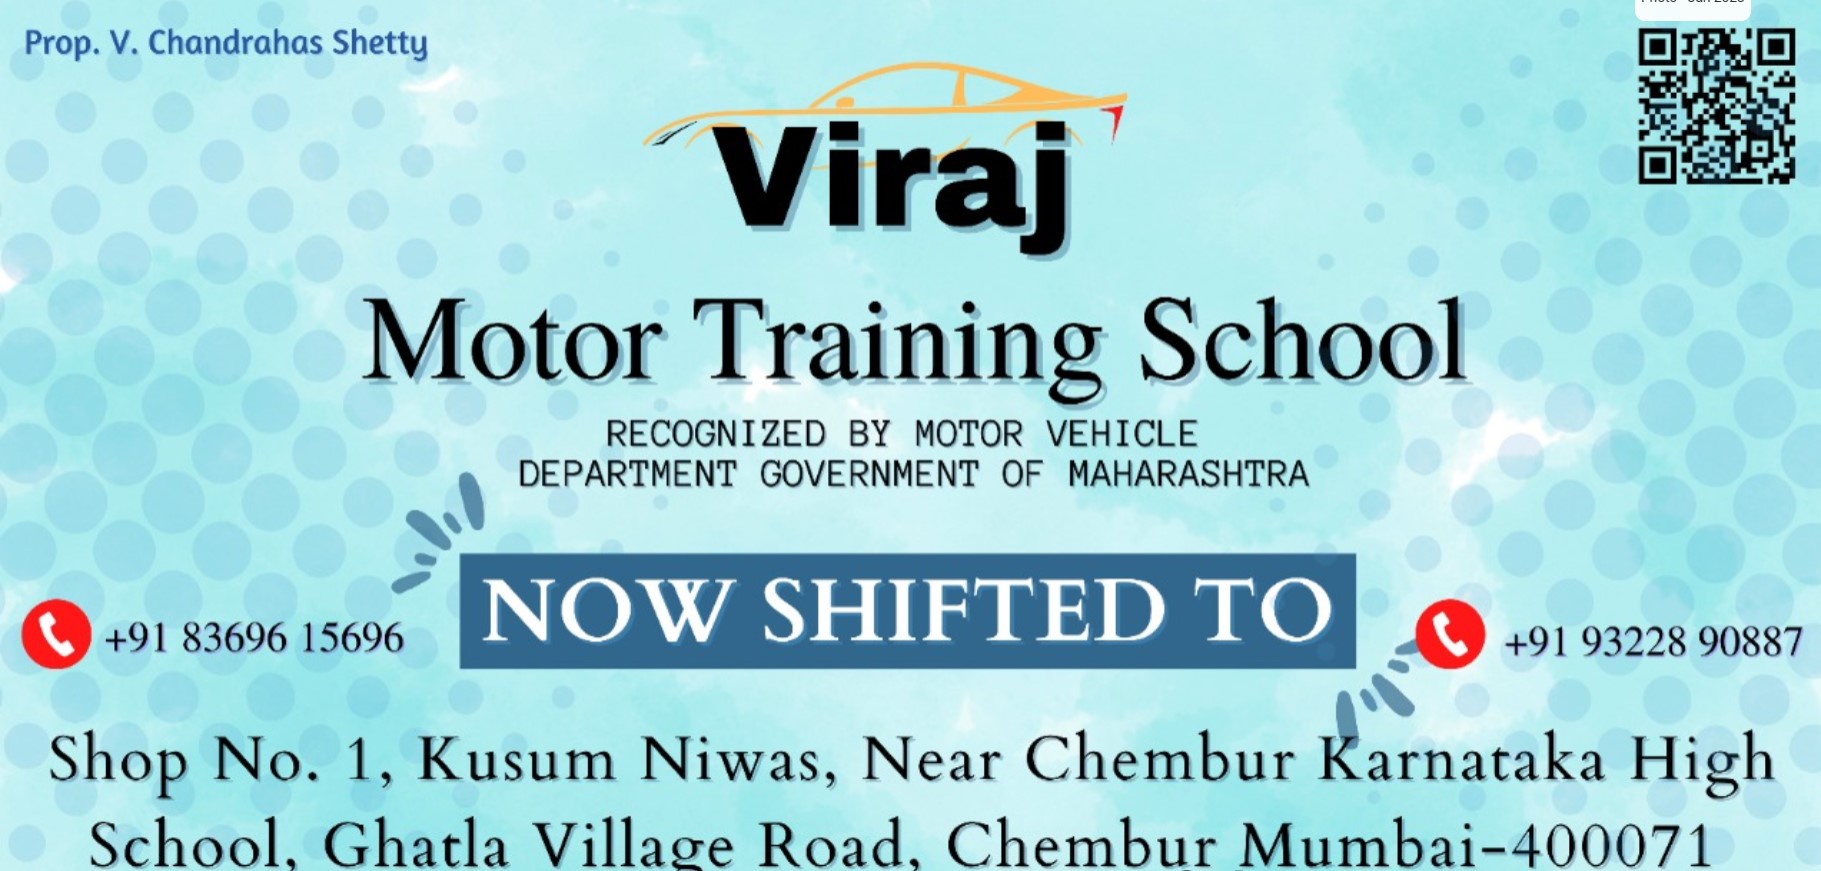 Viraj Motor Driving School in Chembur